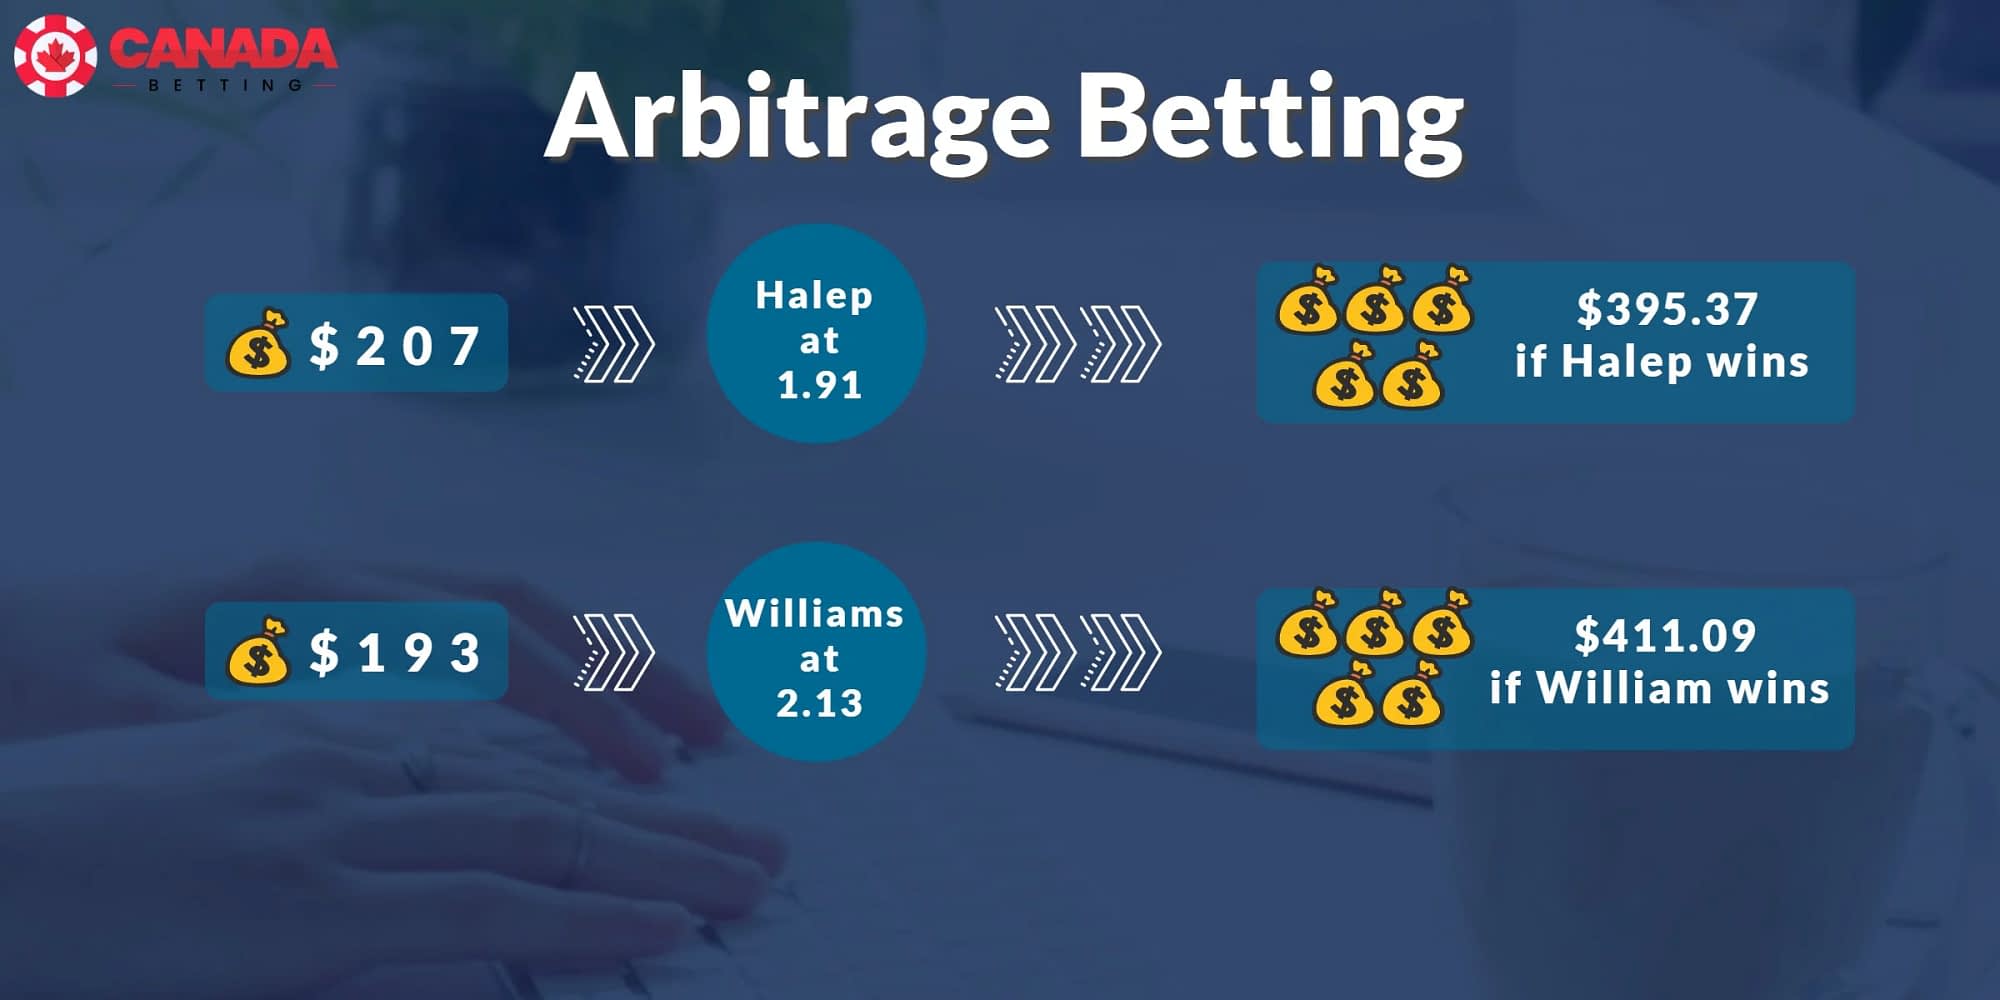 Arbitrage Betting example